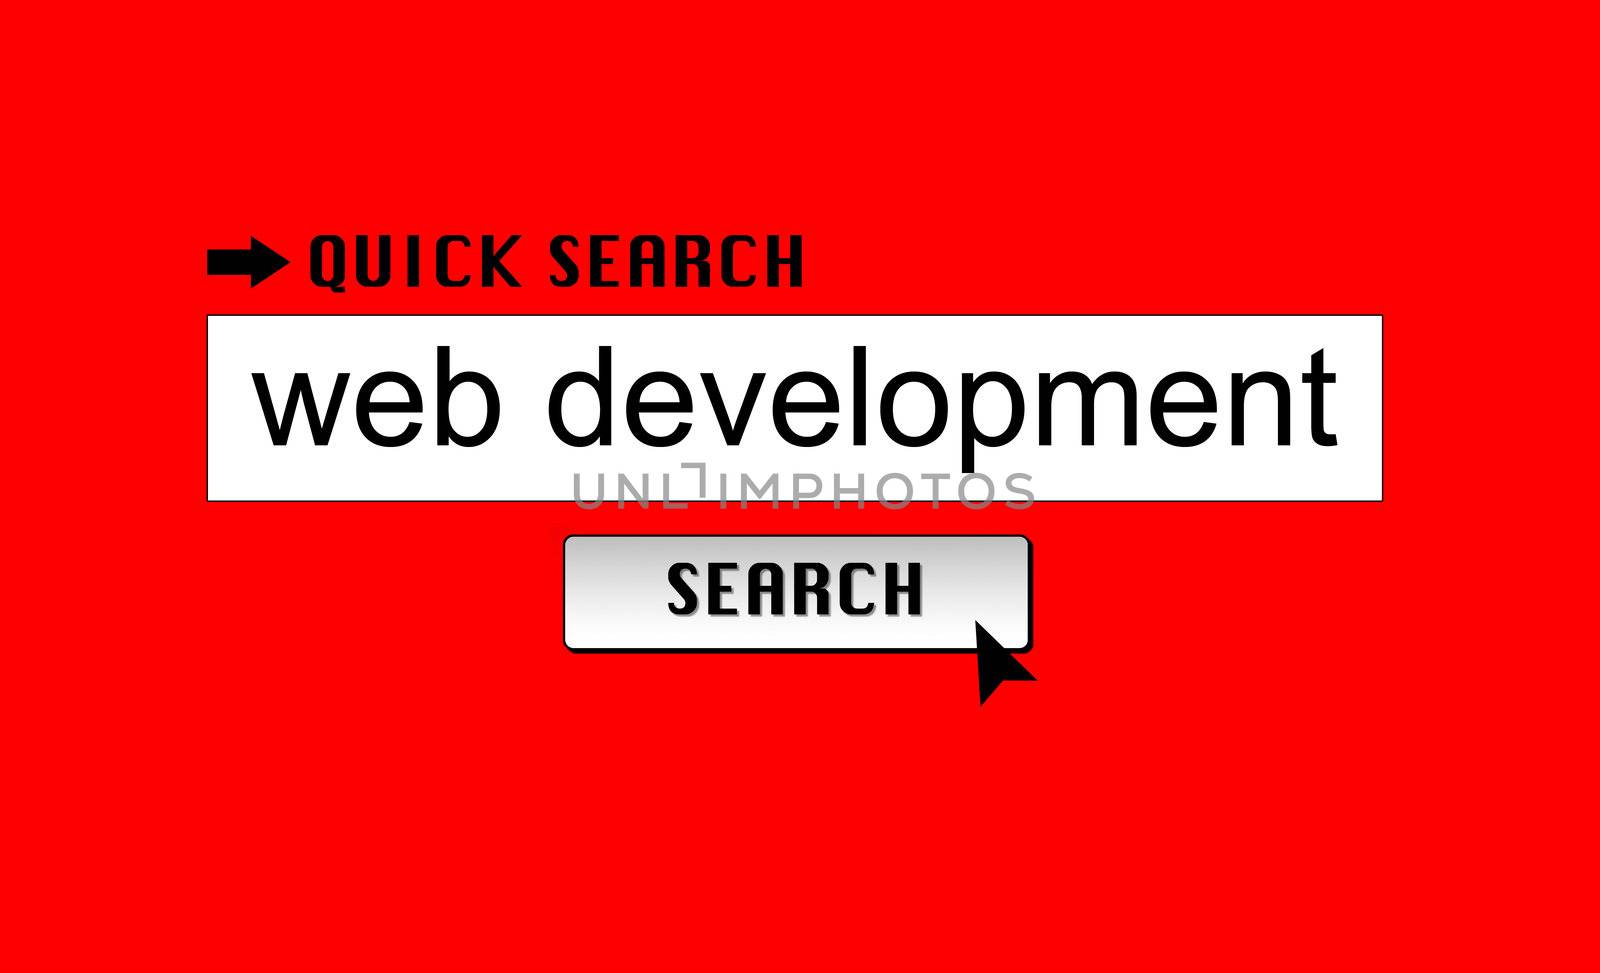 Searching for Web Development by chrisdorney